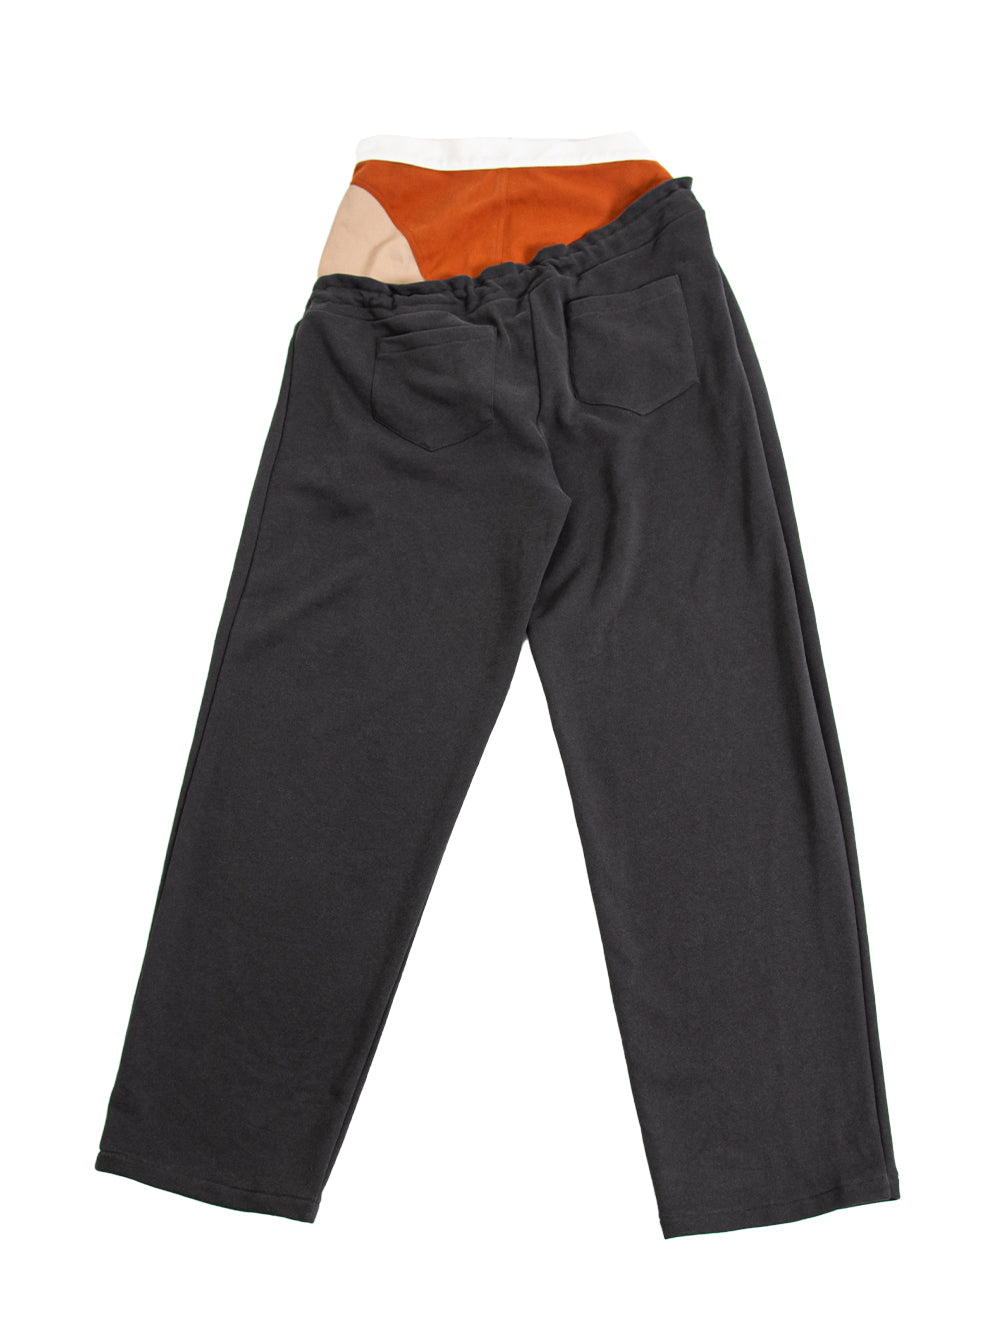 Asymmetry Training Pants (Charcoal/Orange)